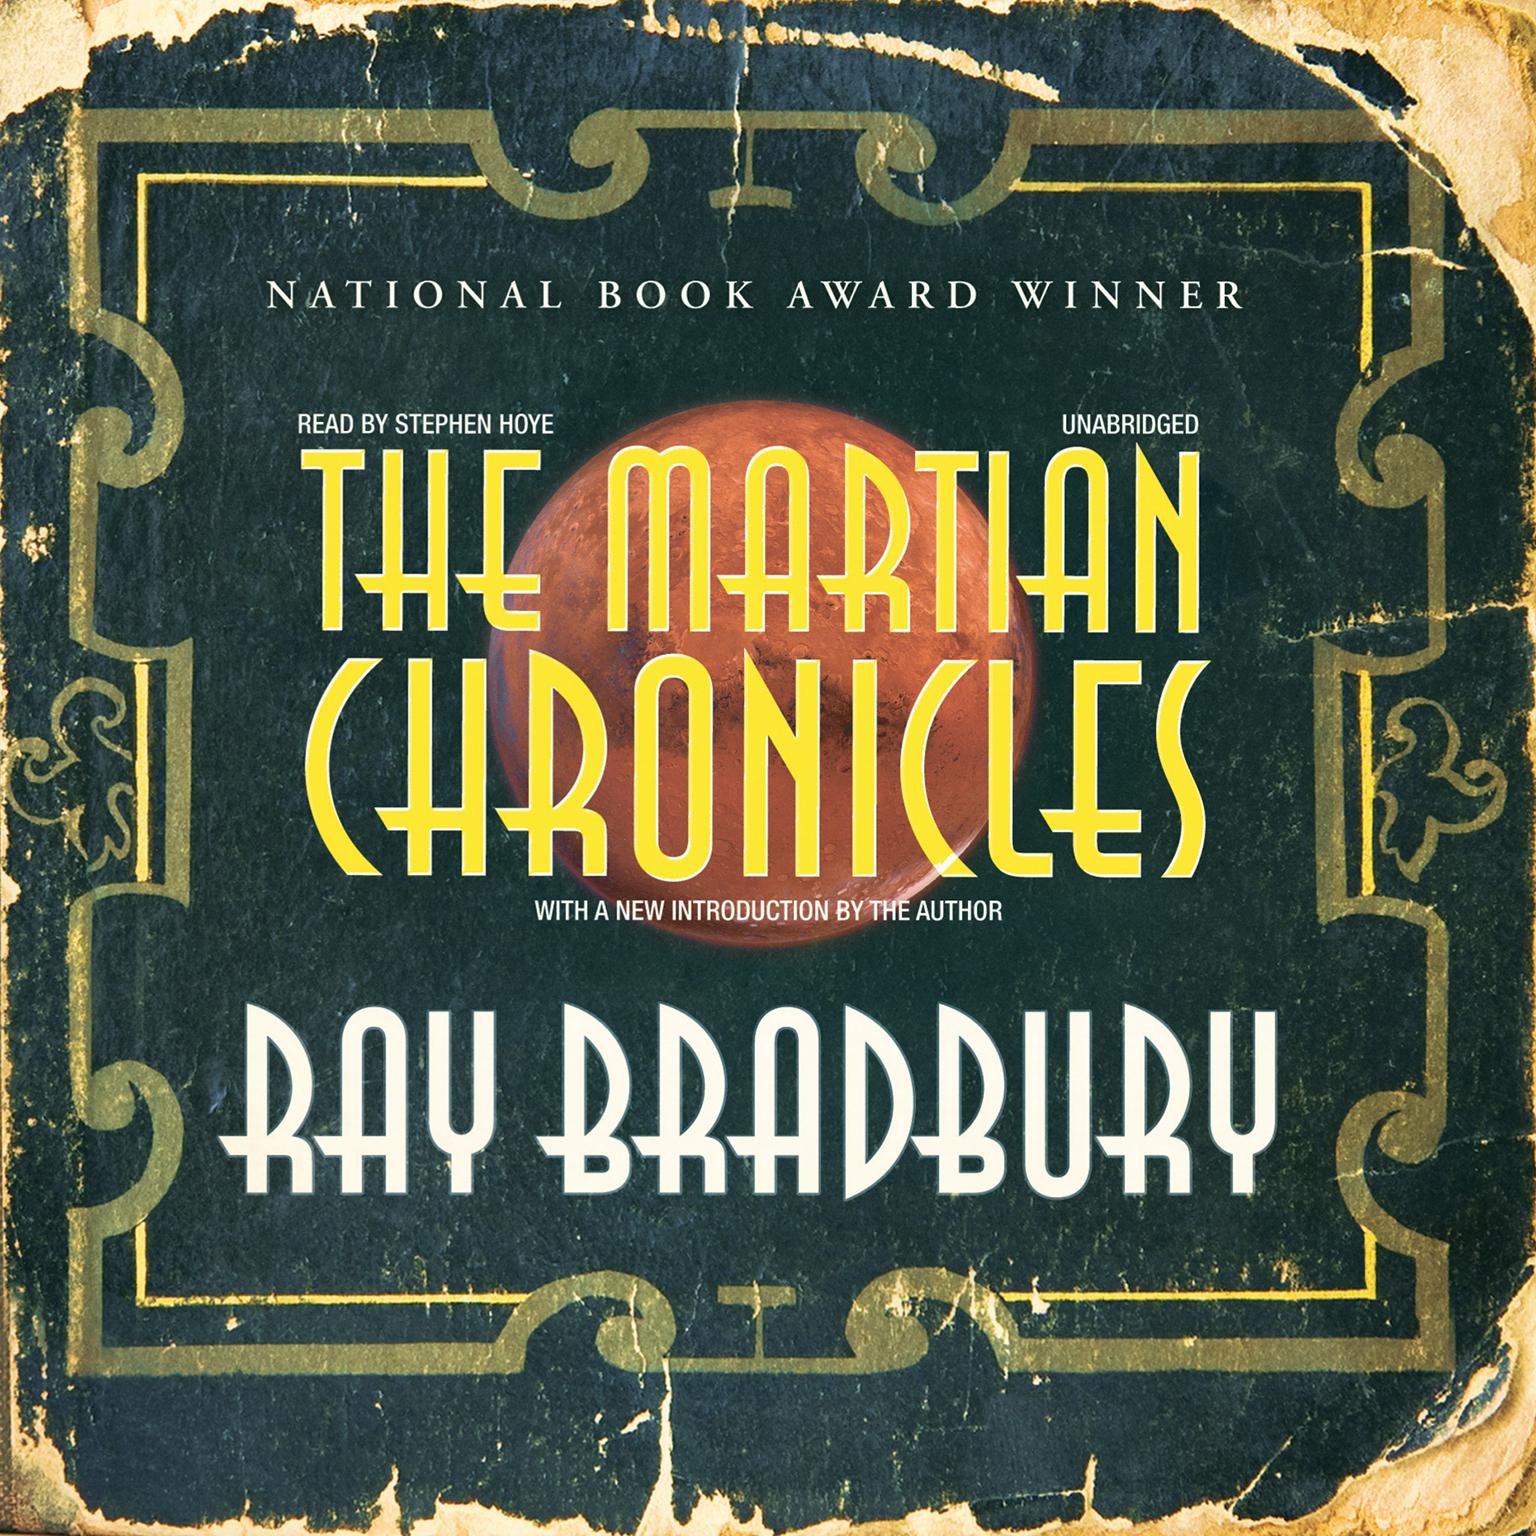 The Martian Chronicles Audiobook, by Ray Bradbury